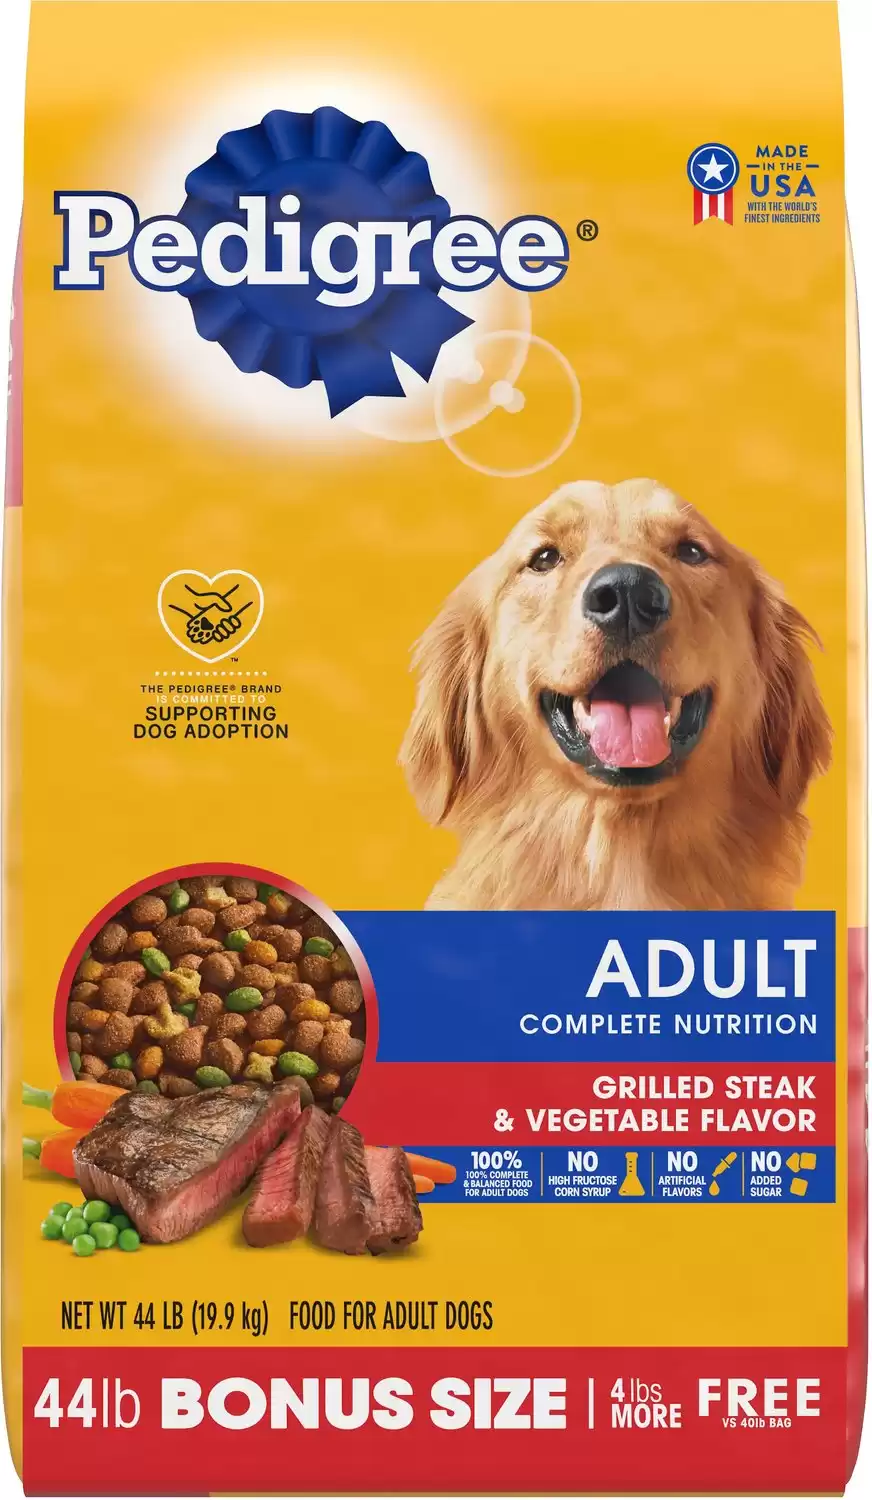 Pedigree Adult Complete Nutrition Dry Dog Food